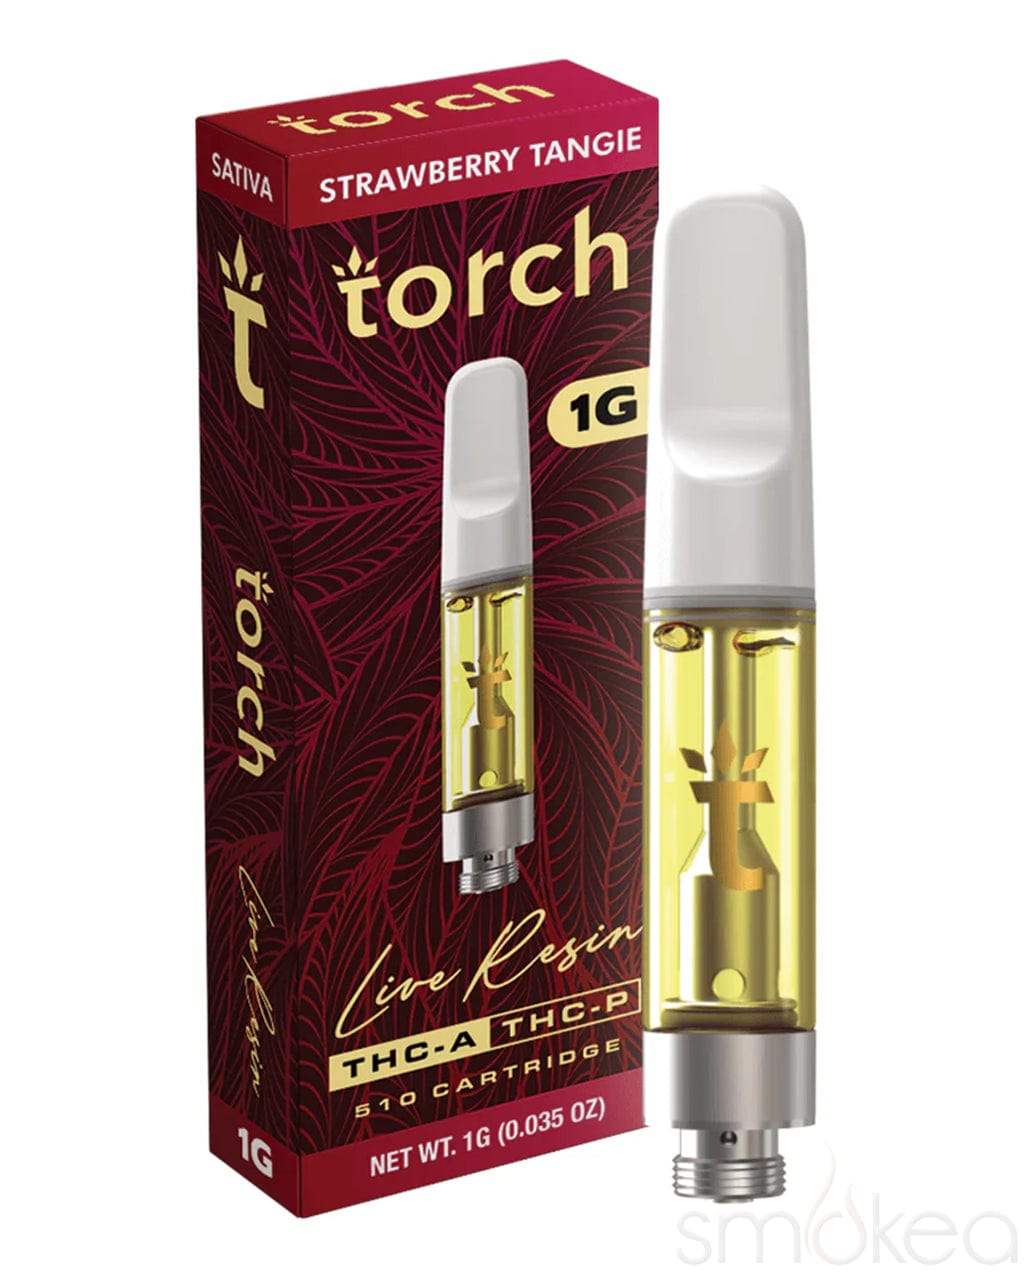 Torch 1g THCA Live Resin Blend Cartridge - Strawberry Tangie